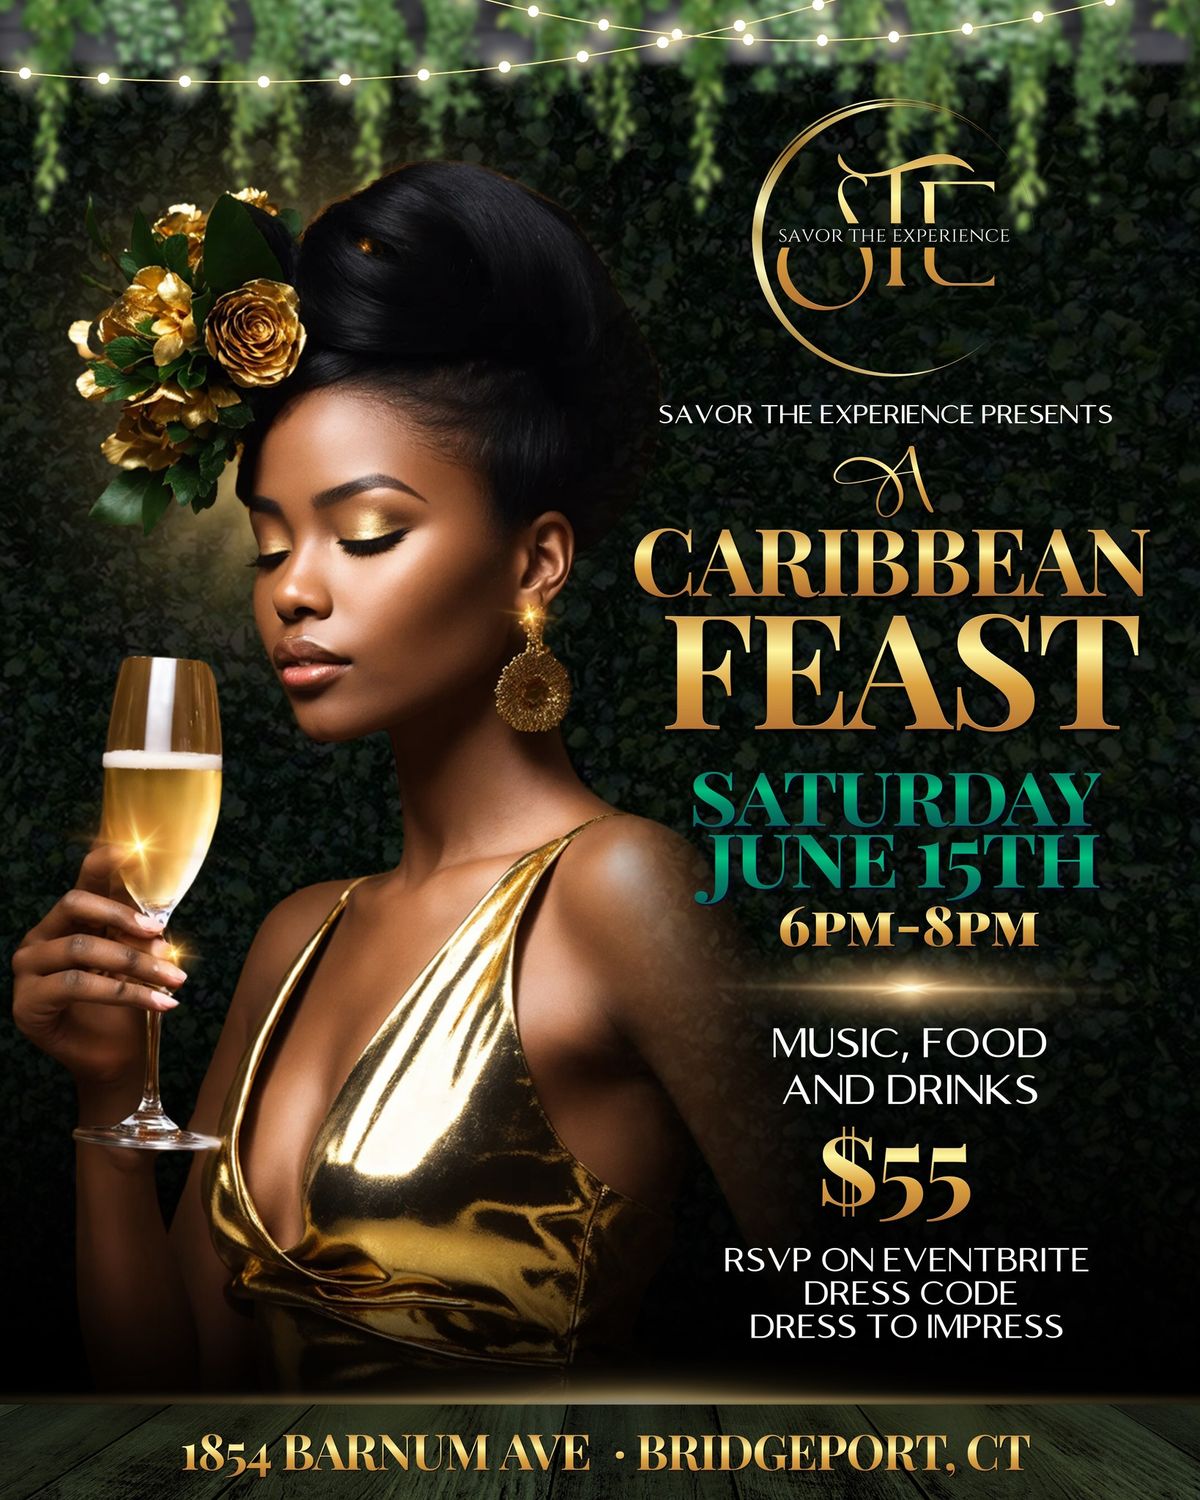 A Caribbean Feast